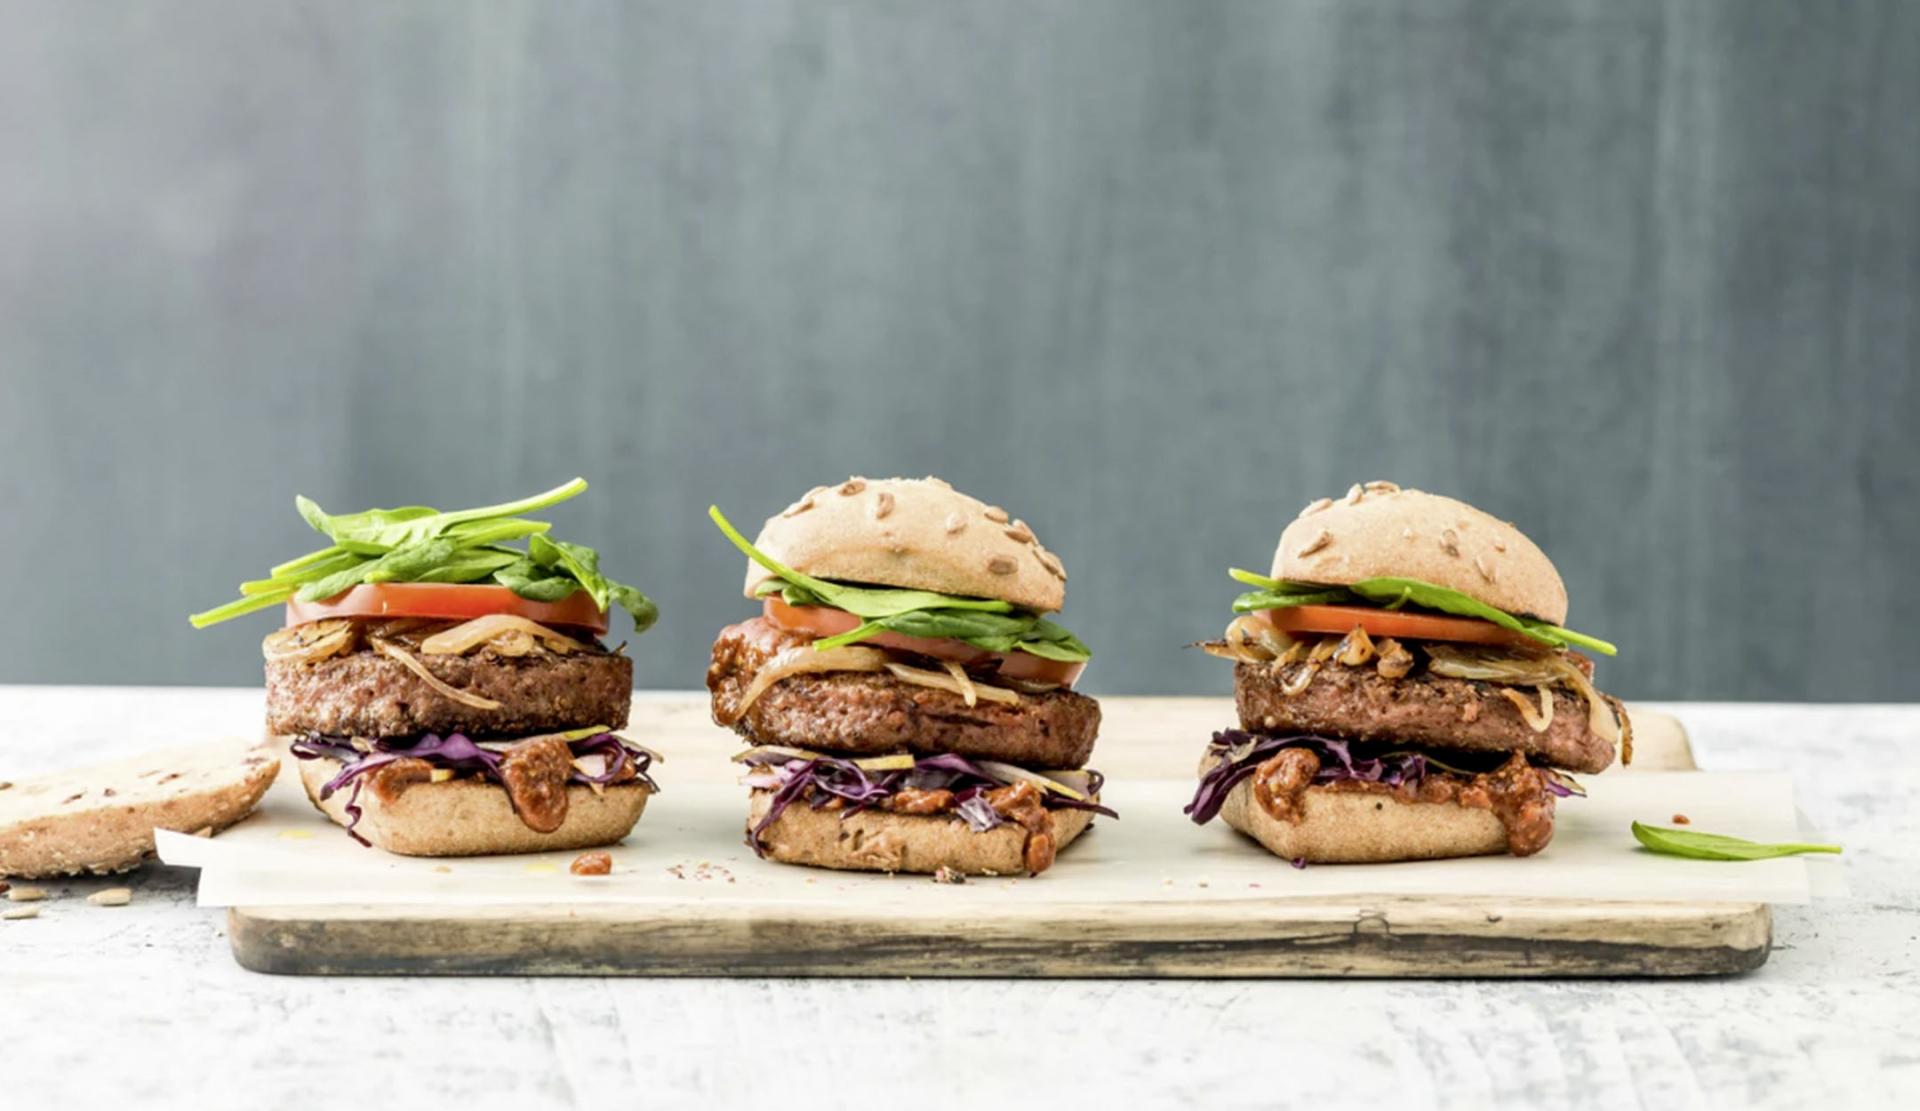 Three vegan burgers on a wooden board